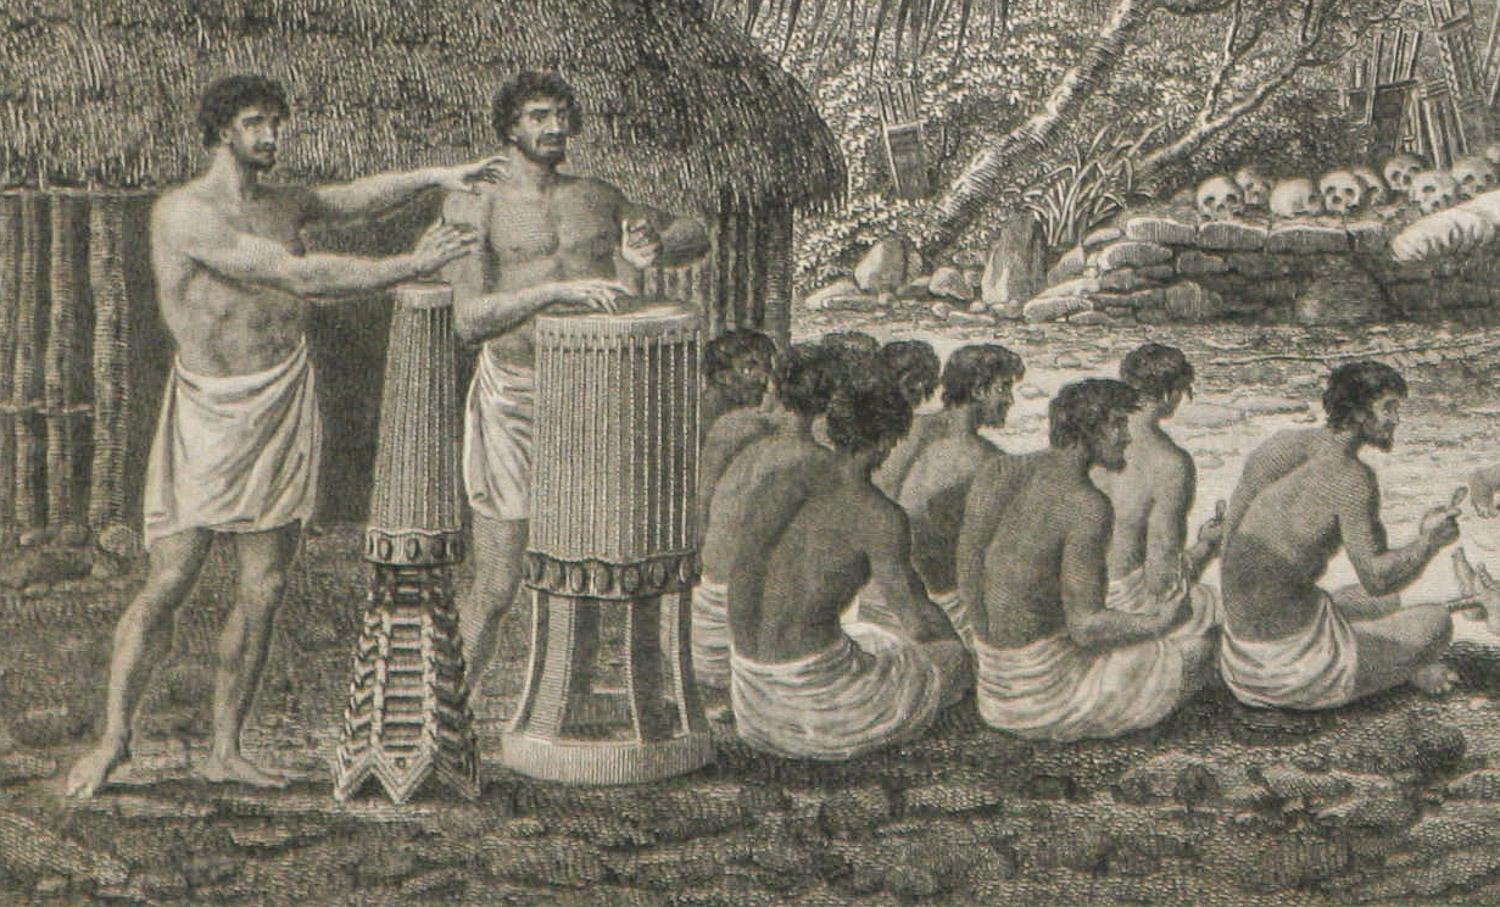 A Human Sacrifice, in a Morai, in Otaheite (Tahiti) 1784 James Cook Final Voyage - Realist Print by John Webber